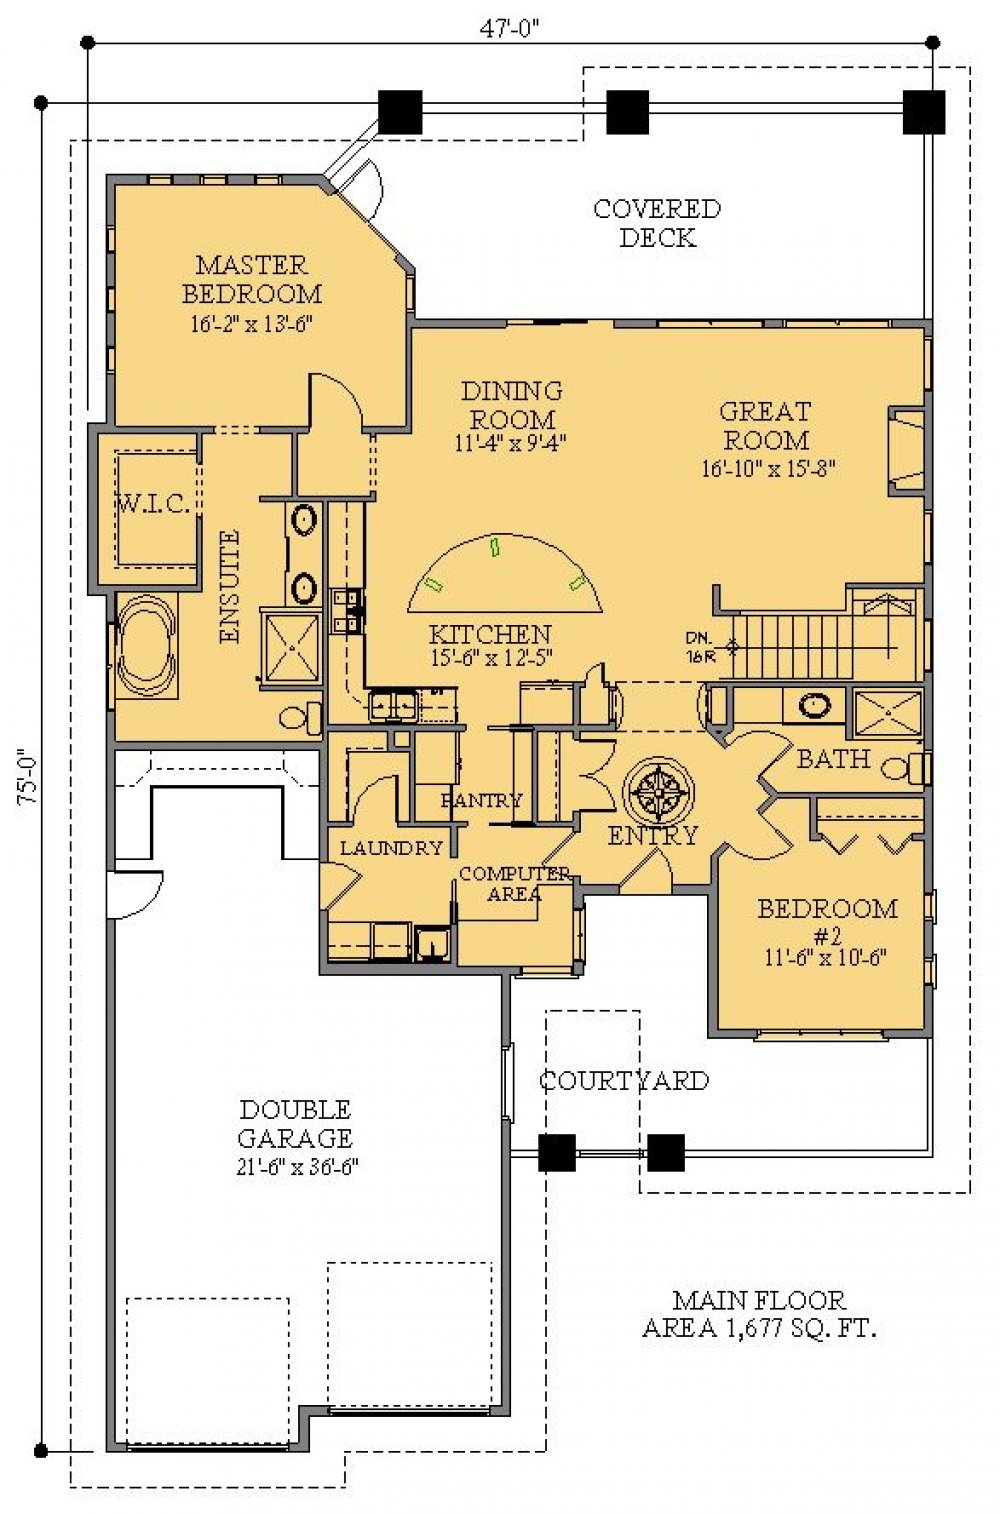 House Plan E1088-10 Main Floor Plan